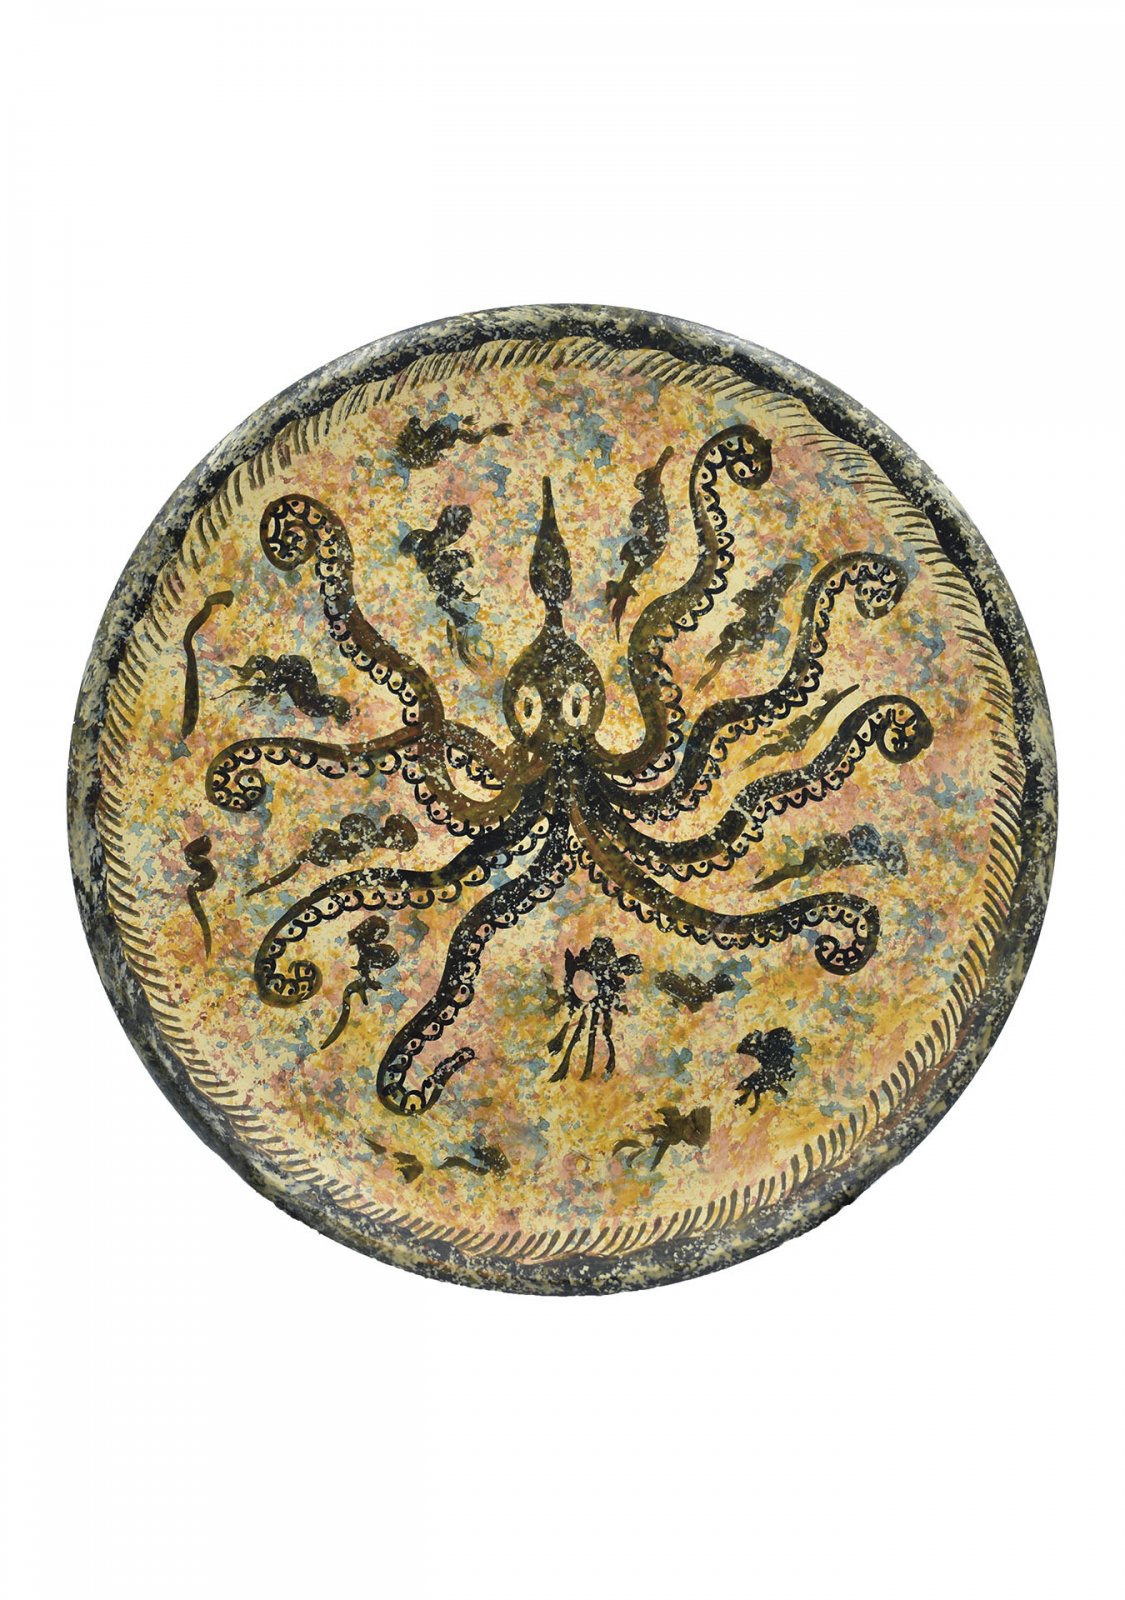 Greek ceramic plate depicting an octopus (20cm)